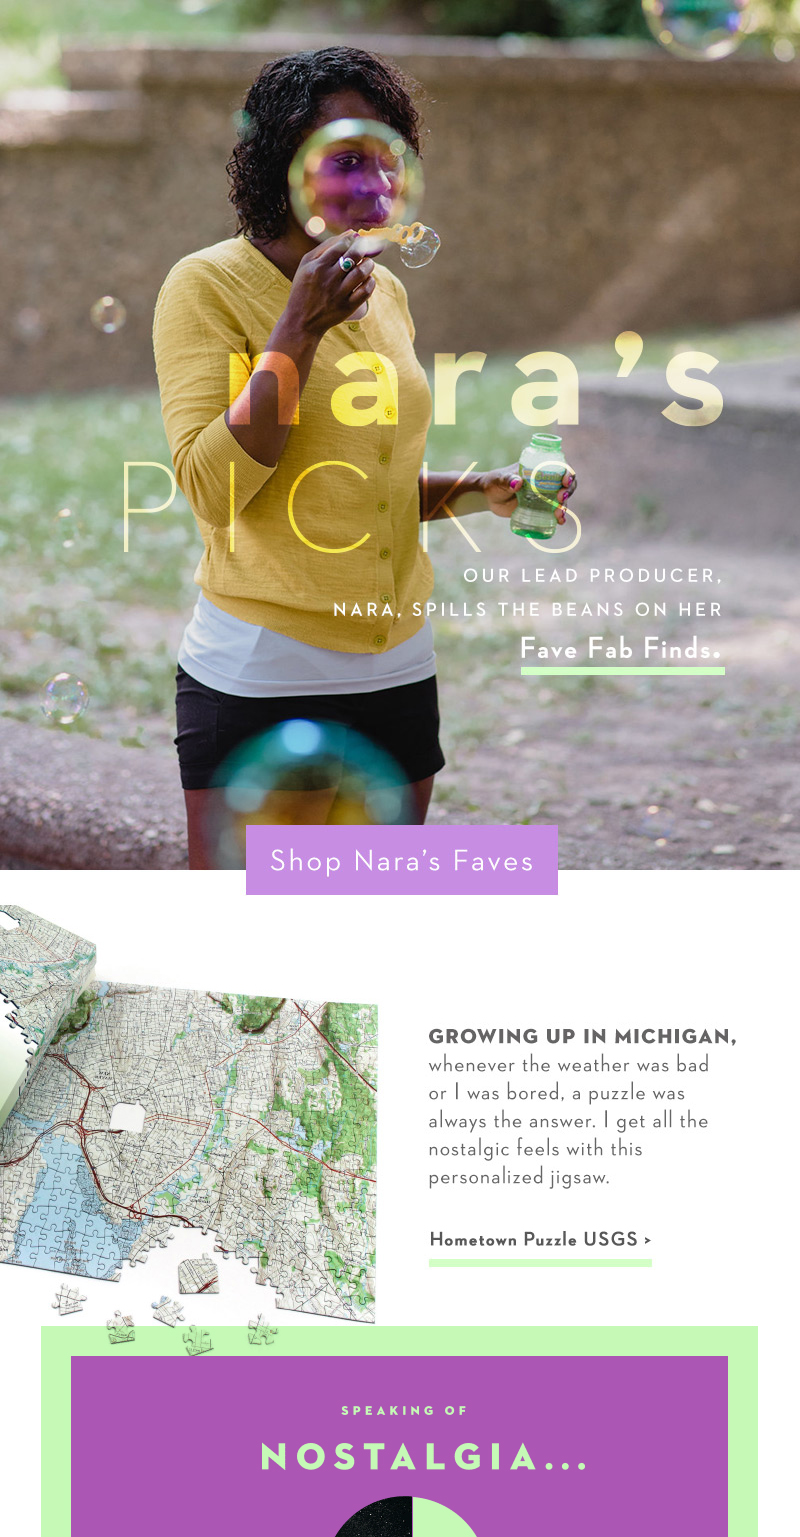 Nara's Picks